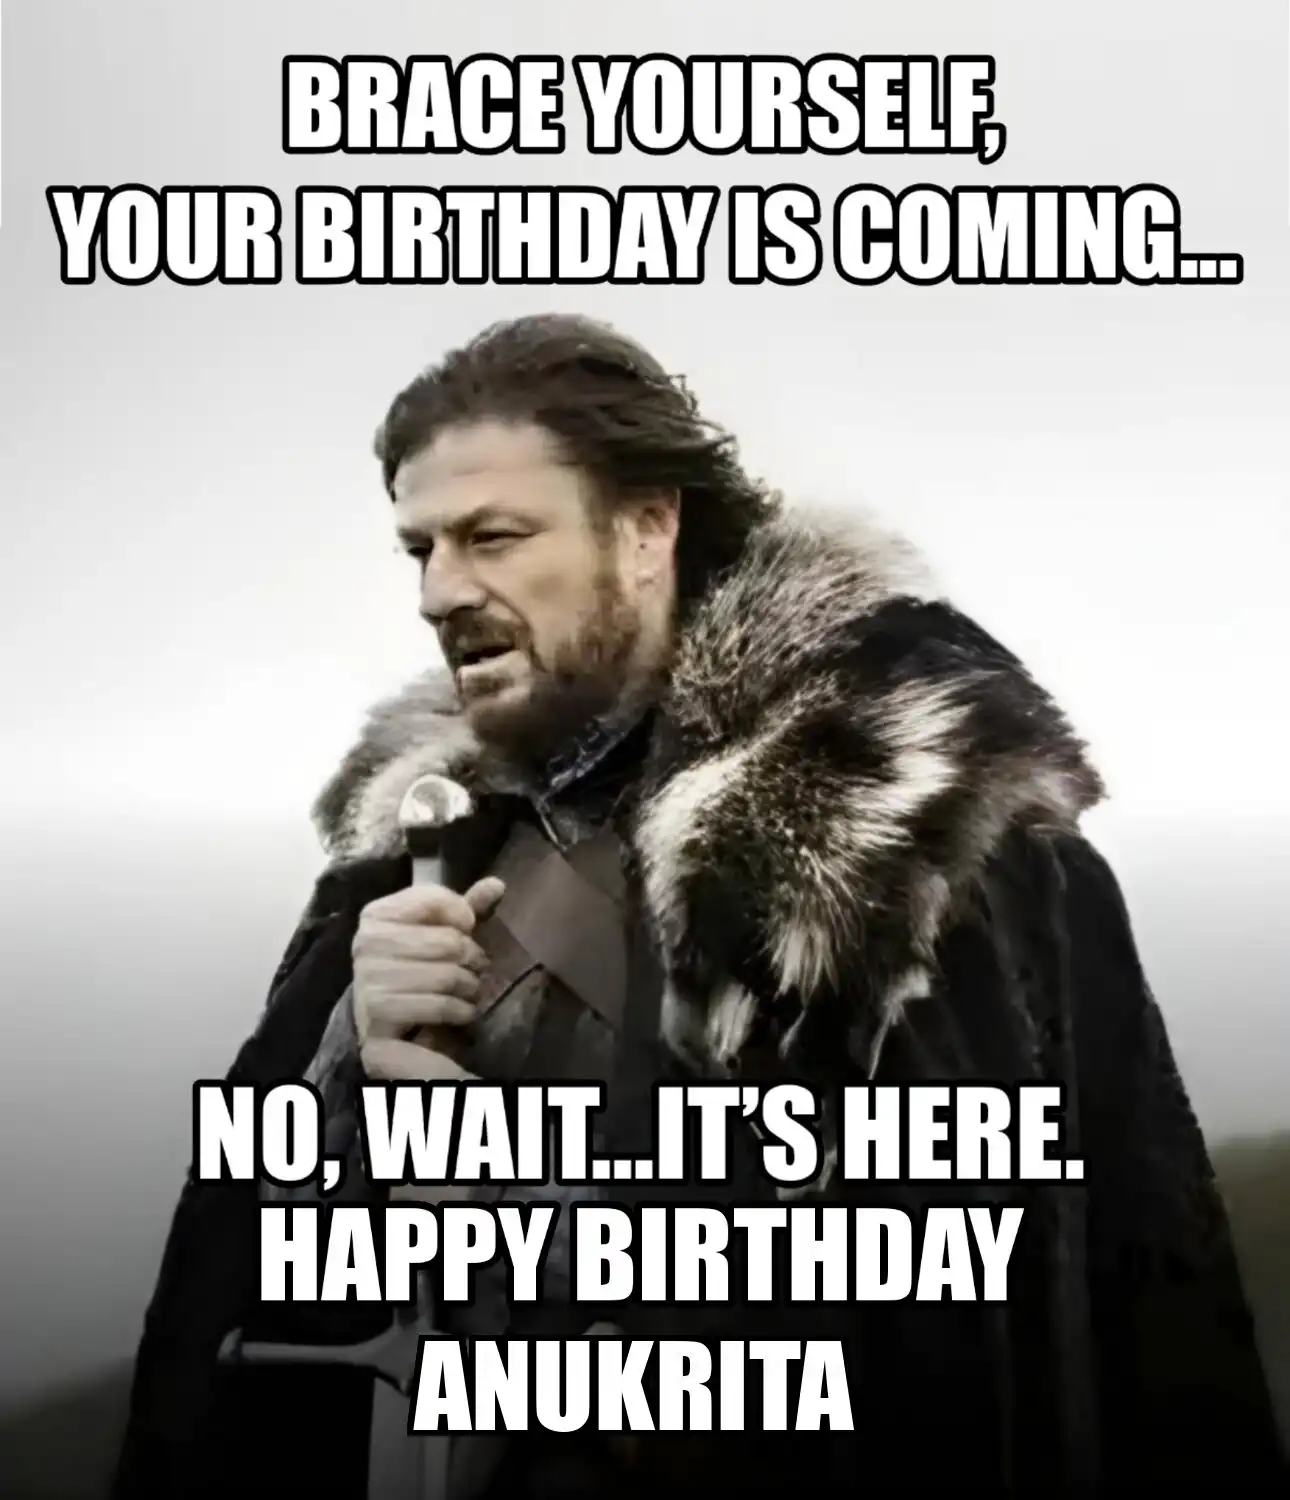 Happy Birthday Anukrita Brace Yourself Your Birthday Is Coming Meme